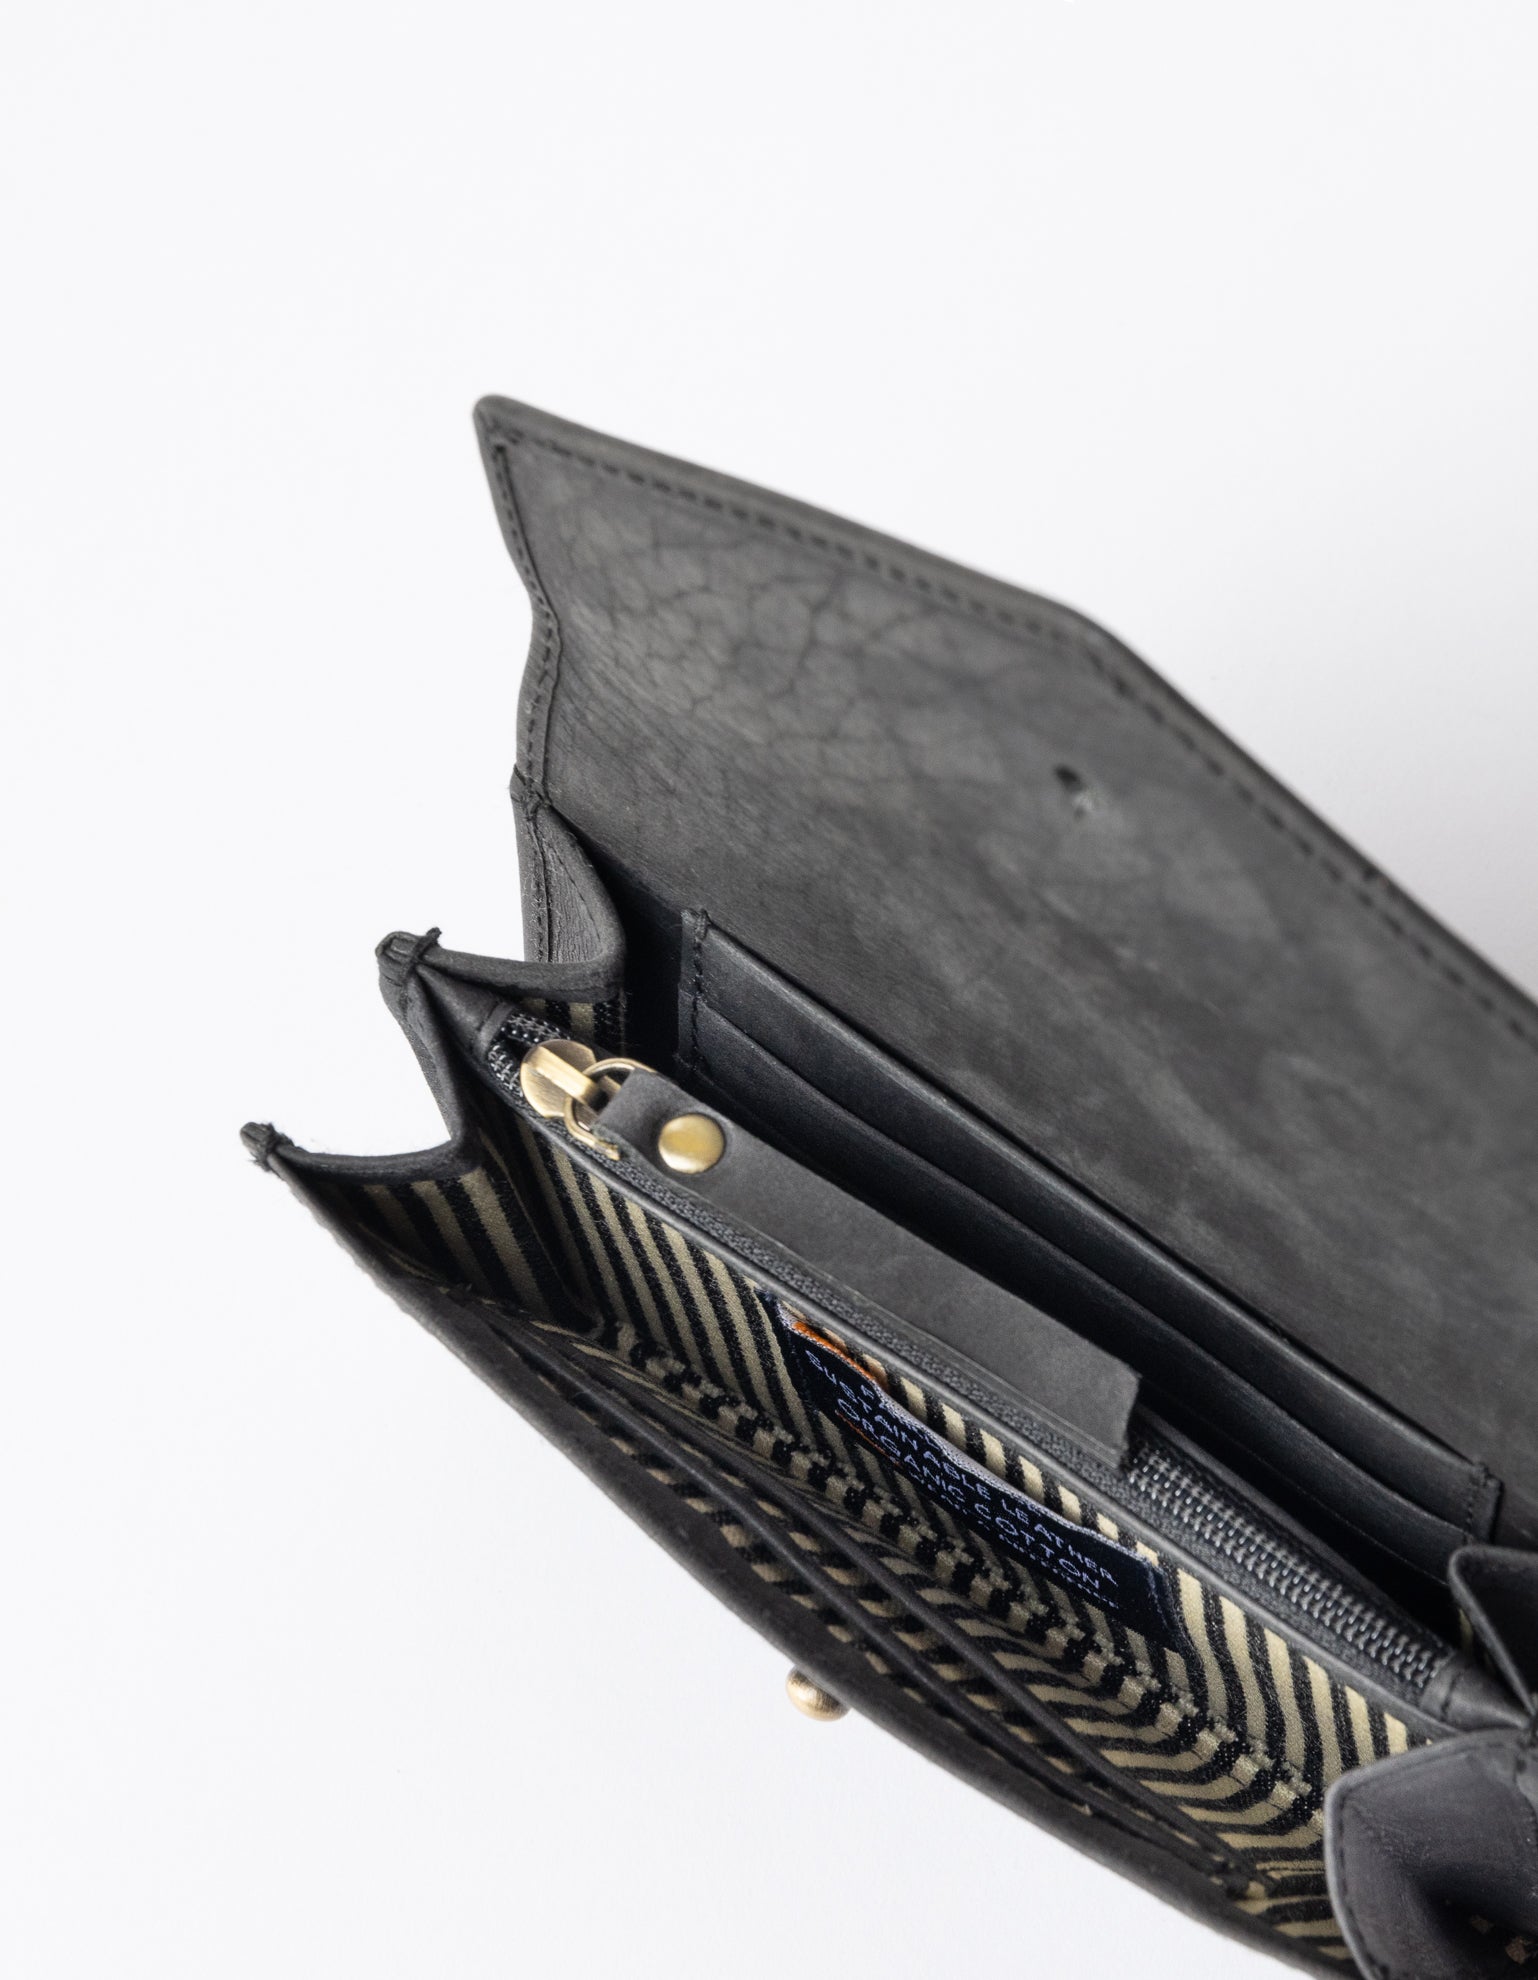 Jo's purse in black hunter leather. Inside product image.